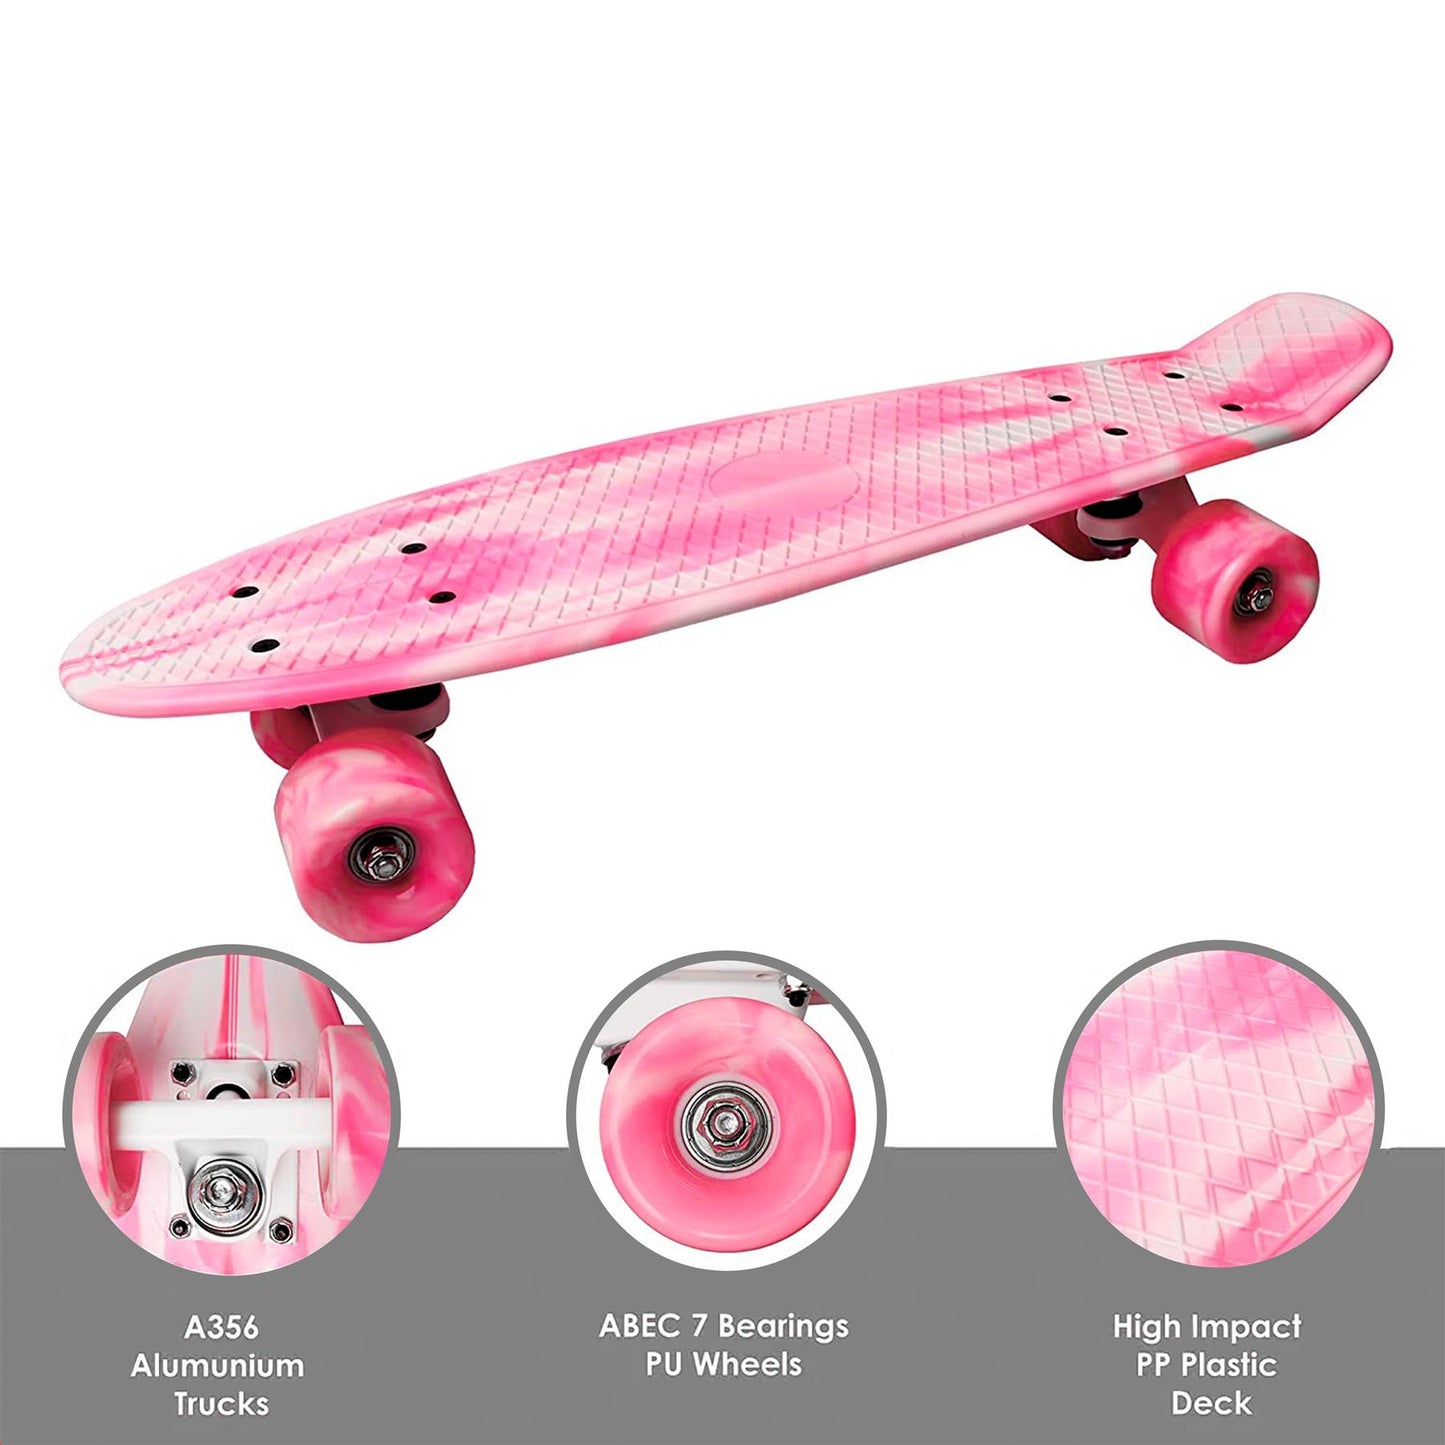 Retro Skateboard Pink by The Magic Toy Shop - UKBuyZone